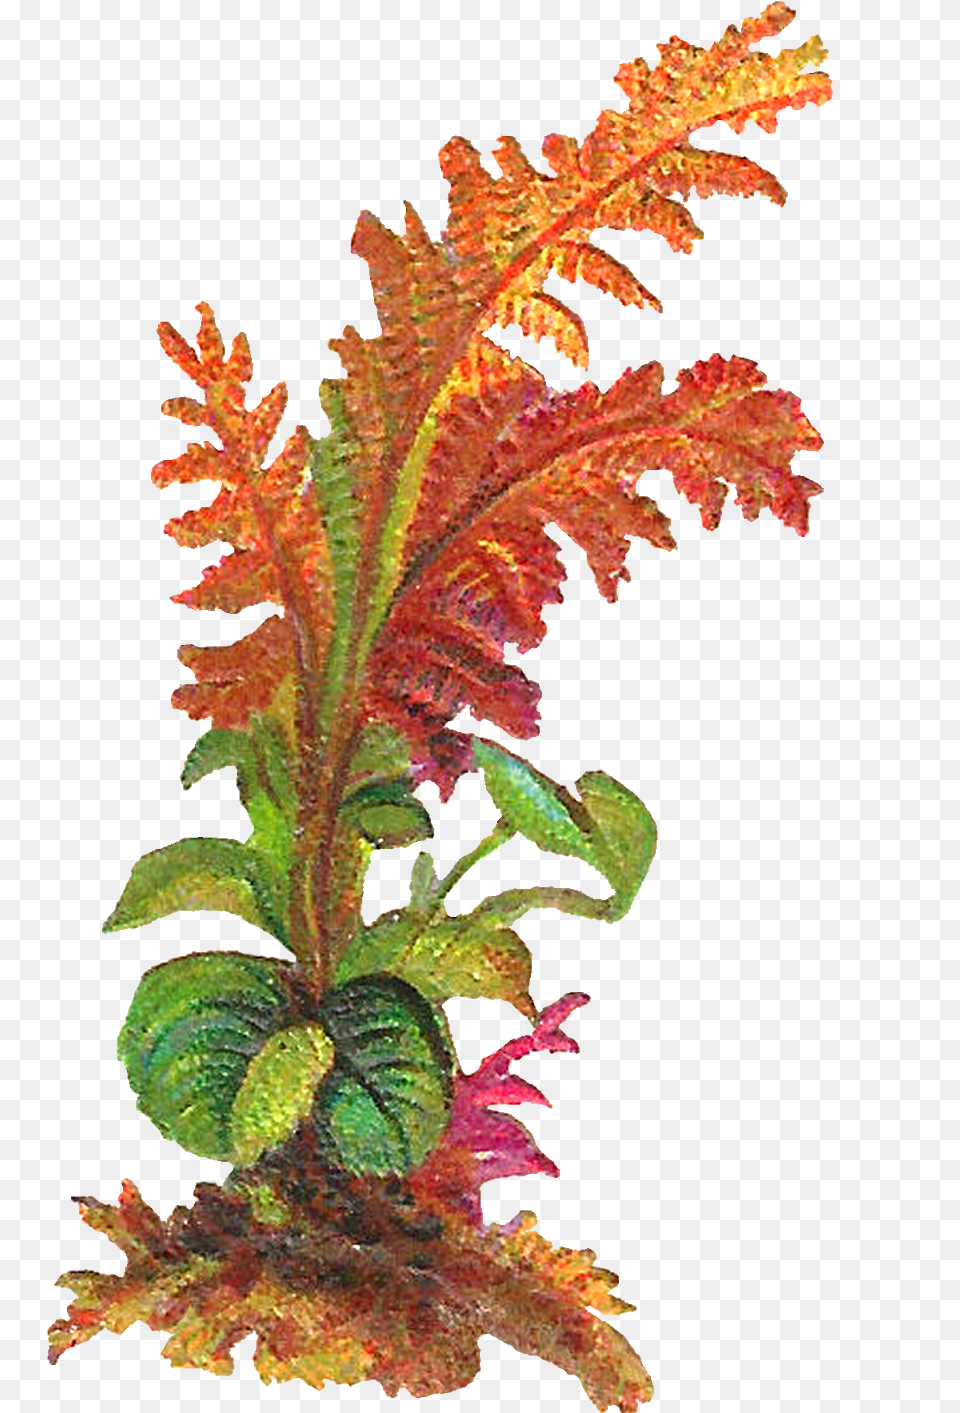 The Second Digital Leaves Is Also Designed Obras De Arte Con Hojas De Plantas, Leaf, Plant, Tree, Acanthaceae Free Png Download